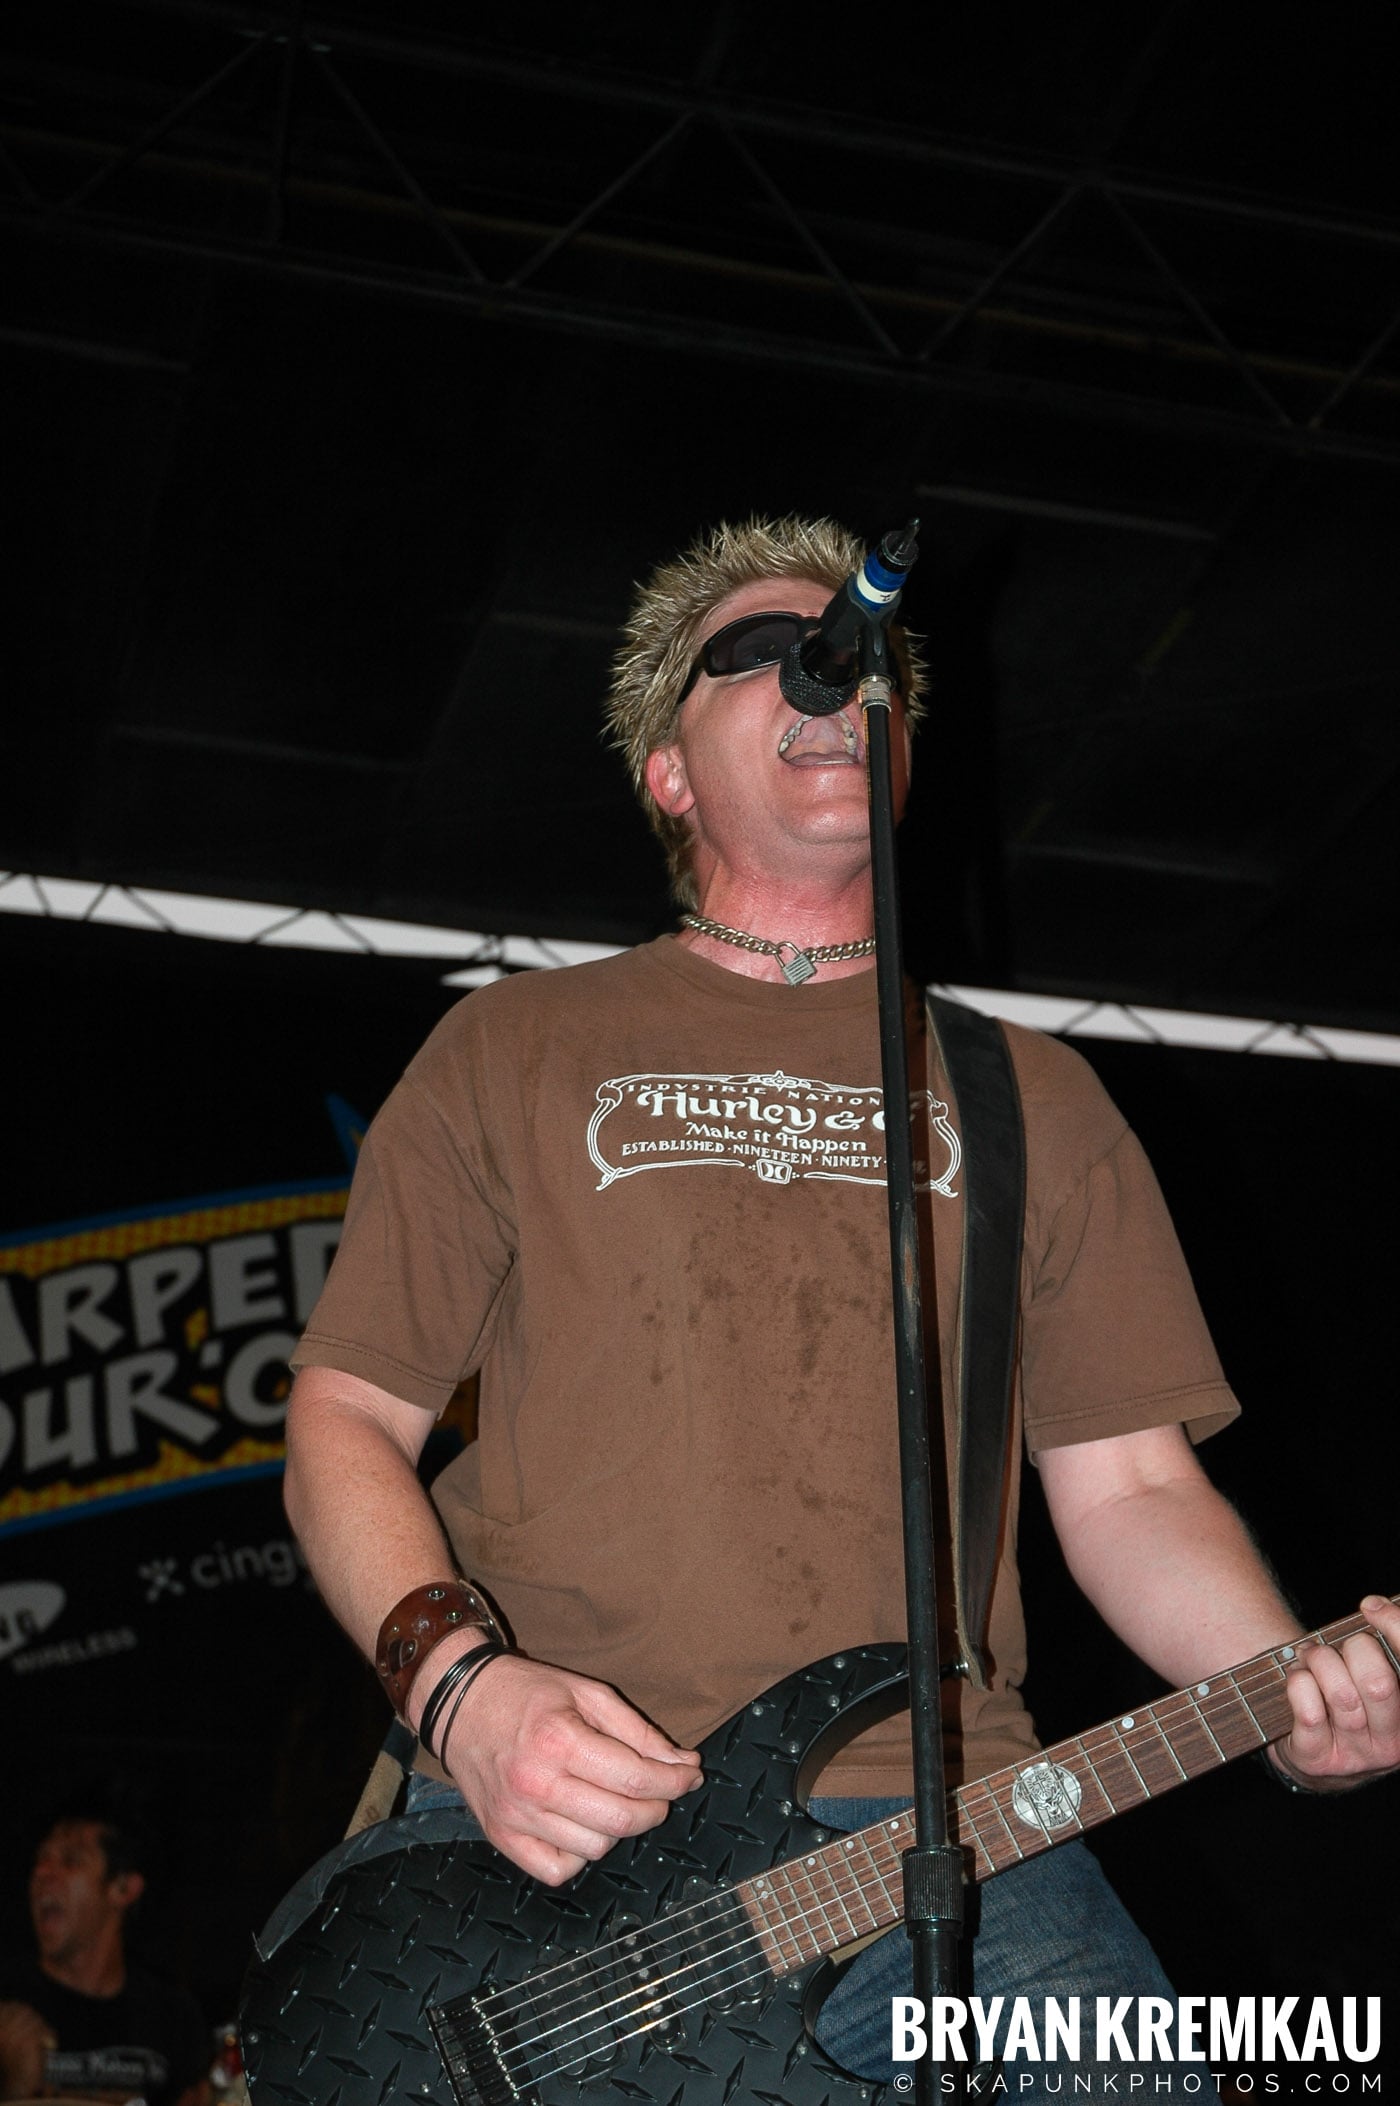 The Offspring @ Warped Tour 05, NYC - 8.12.05 (2)